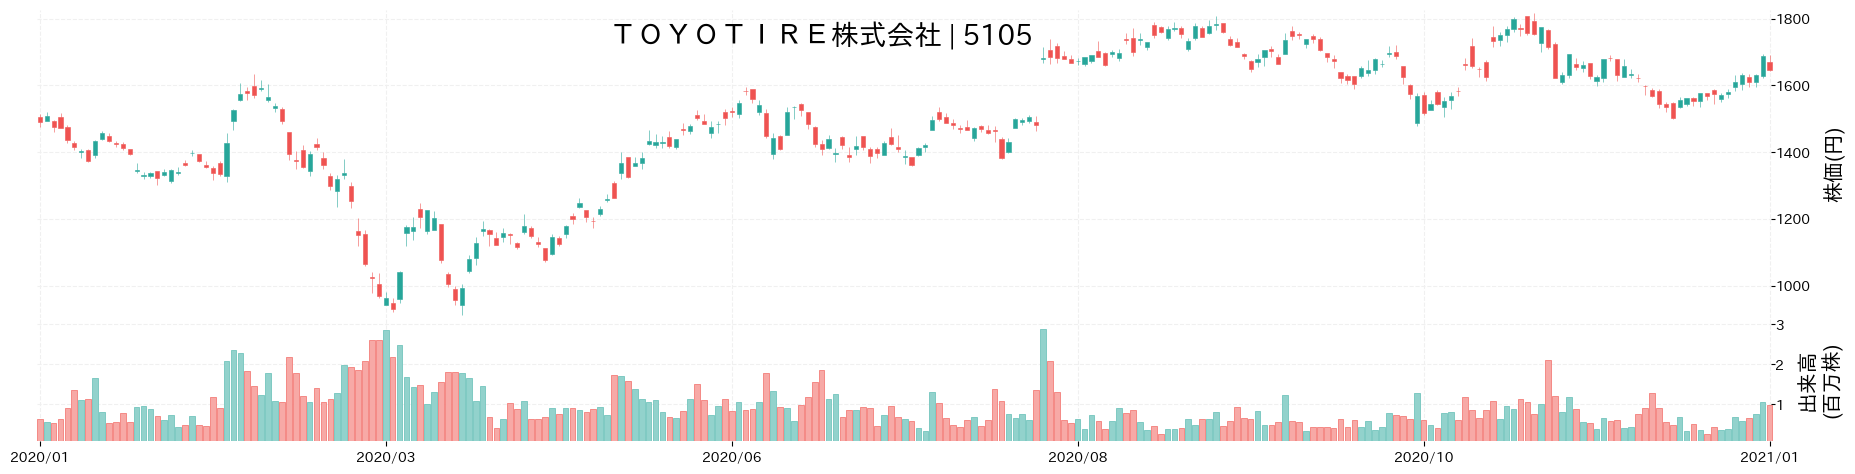 TOYO TIREの株価推移(2020)